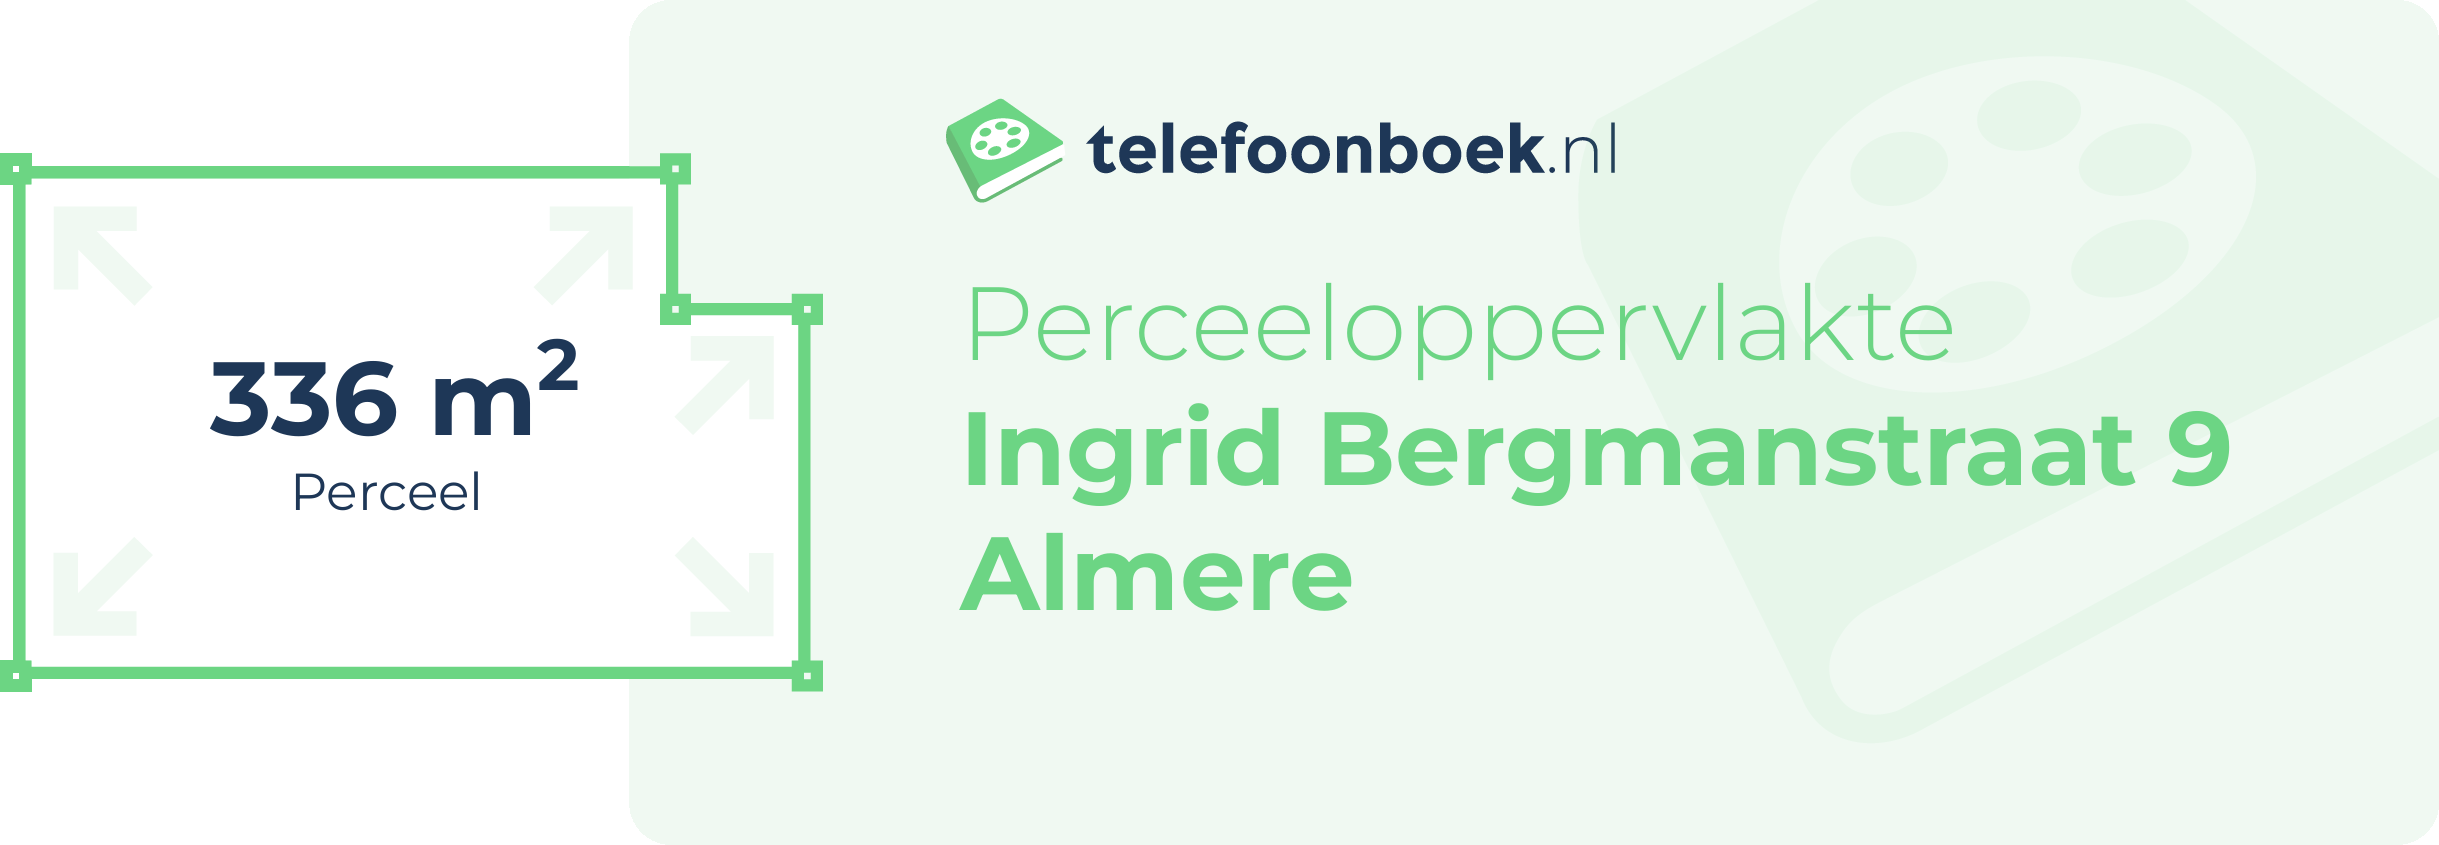 Perceeloppervlakte Ingrid Bergmanstraat 9 Almere